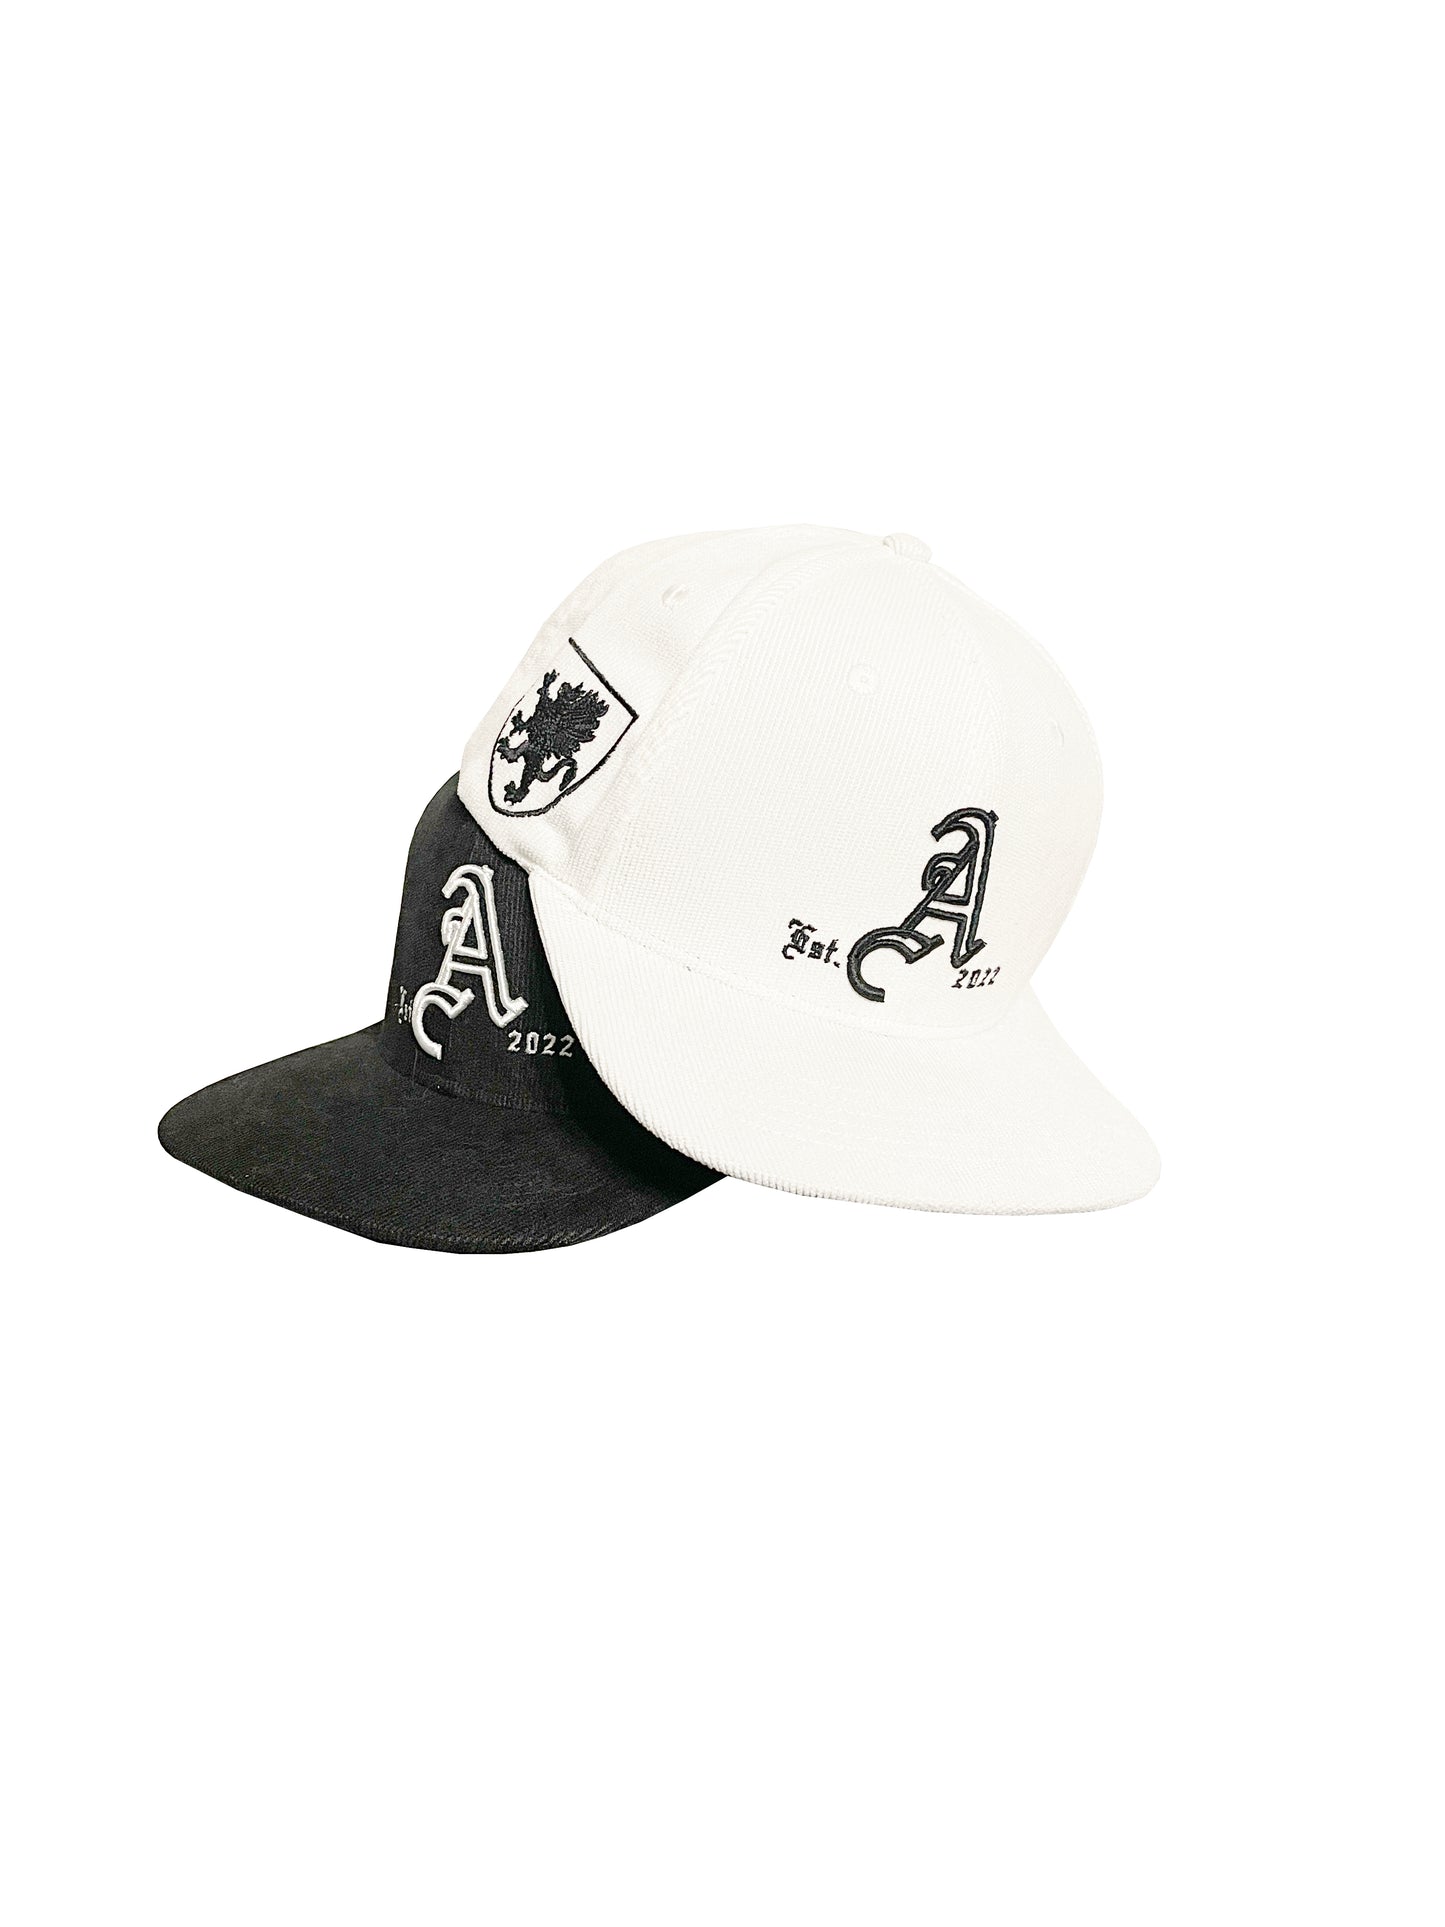 'A' Established Corduroy Hats